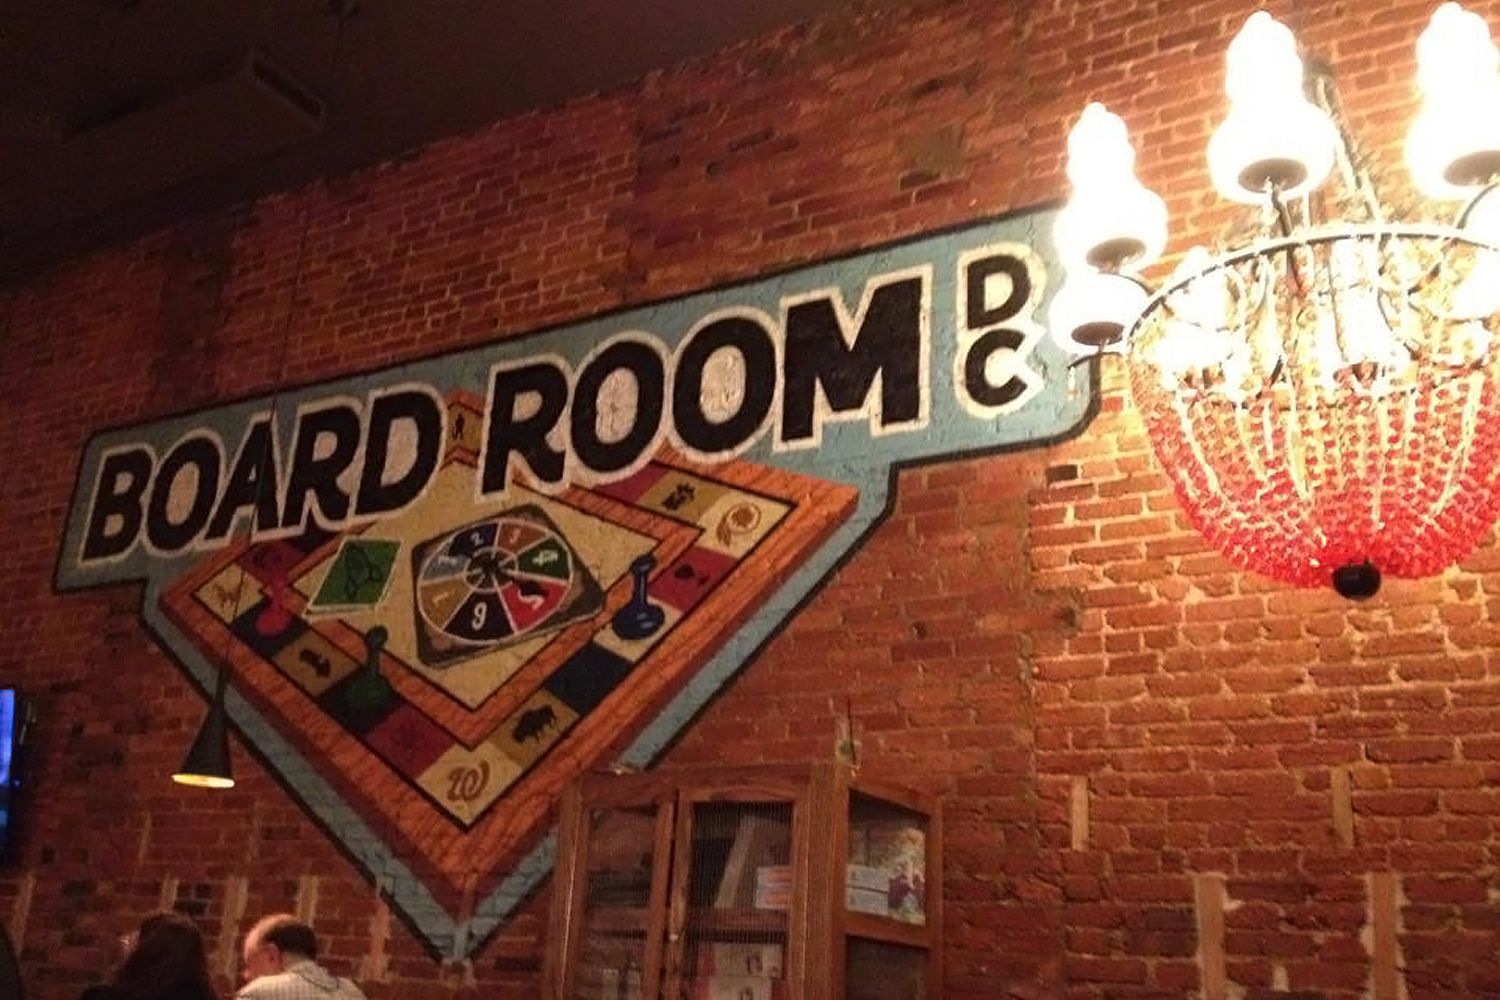 The Board Room!